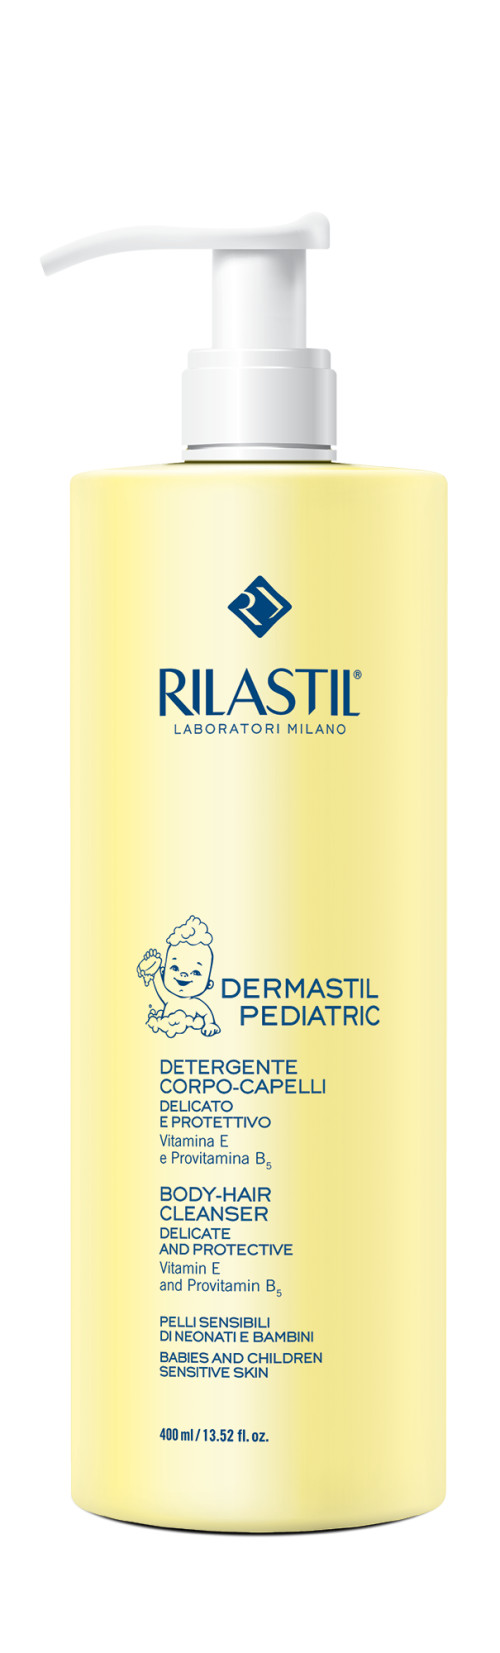 Rilastil Dermastil Pediatric Detergente 400 ml, per neonati e bambini - Top  Farmacia